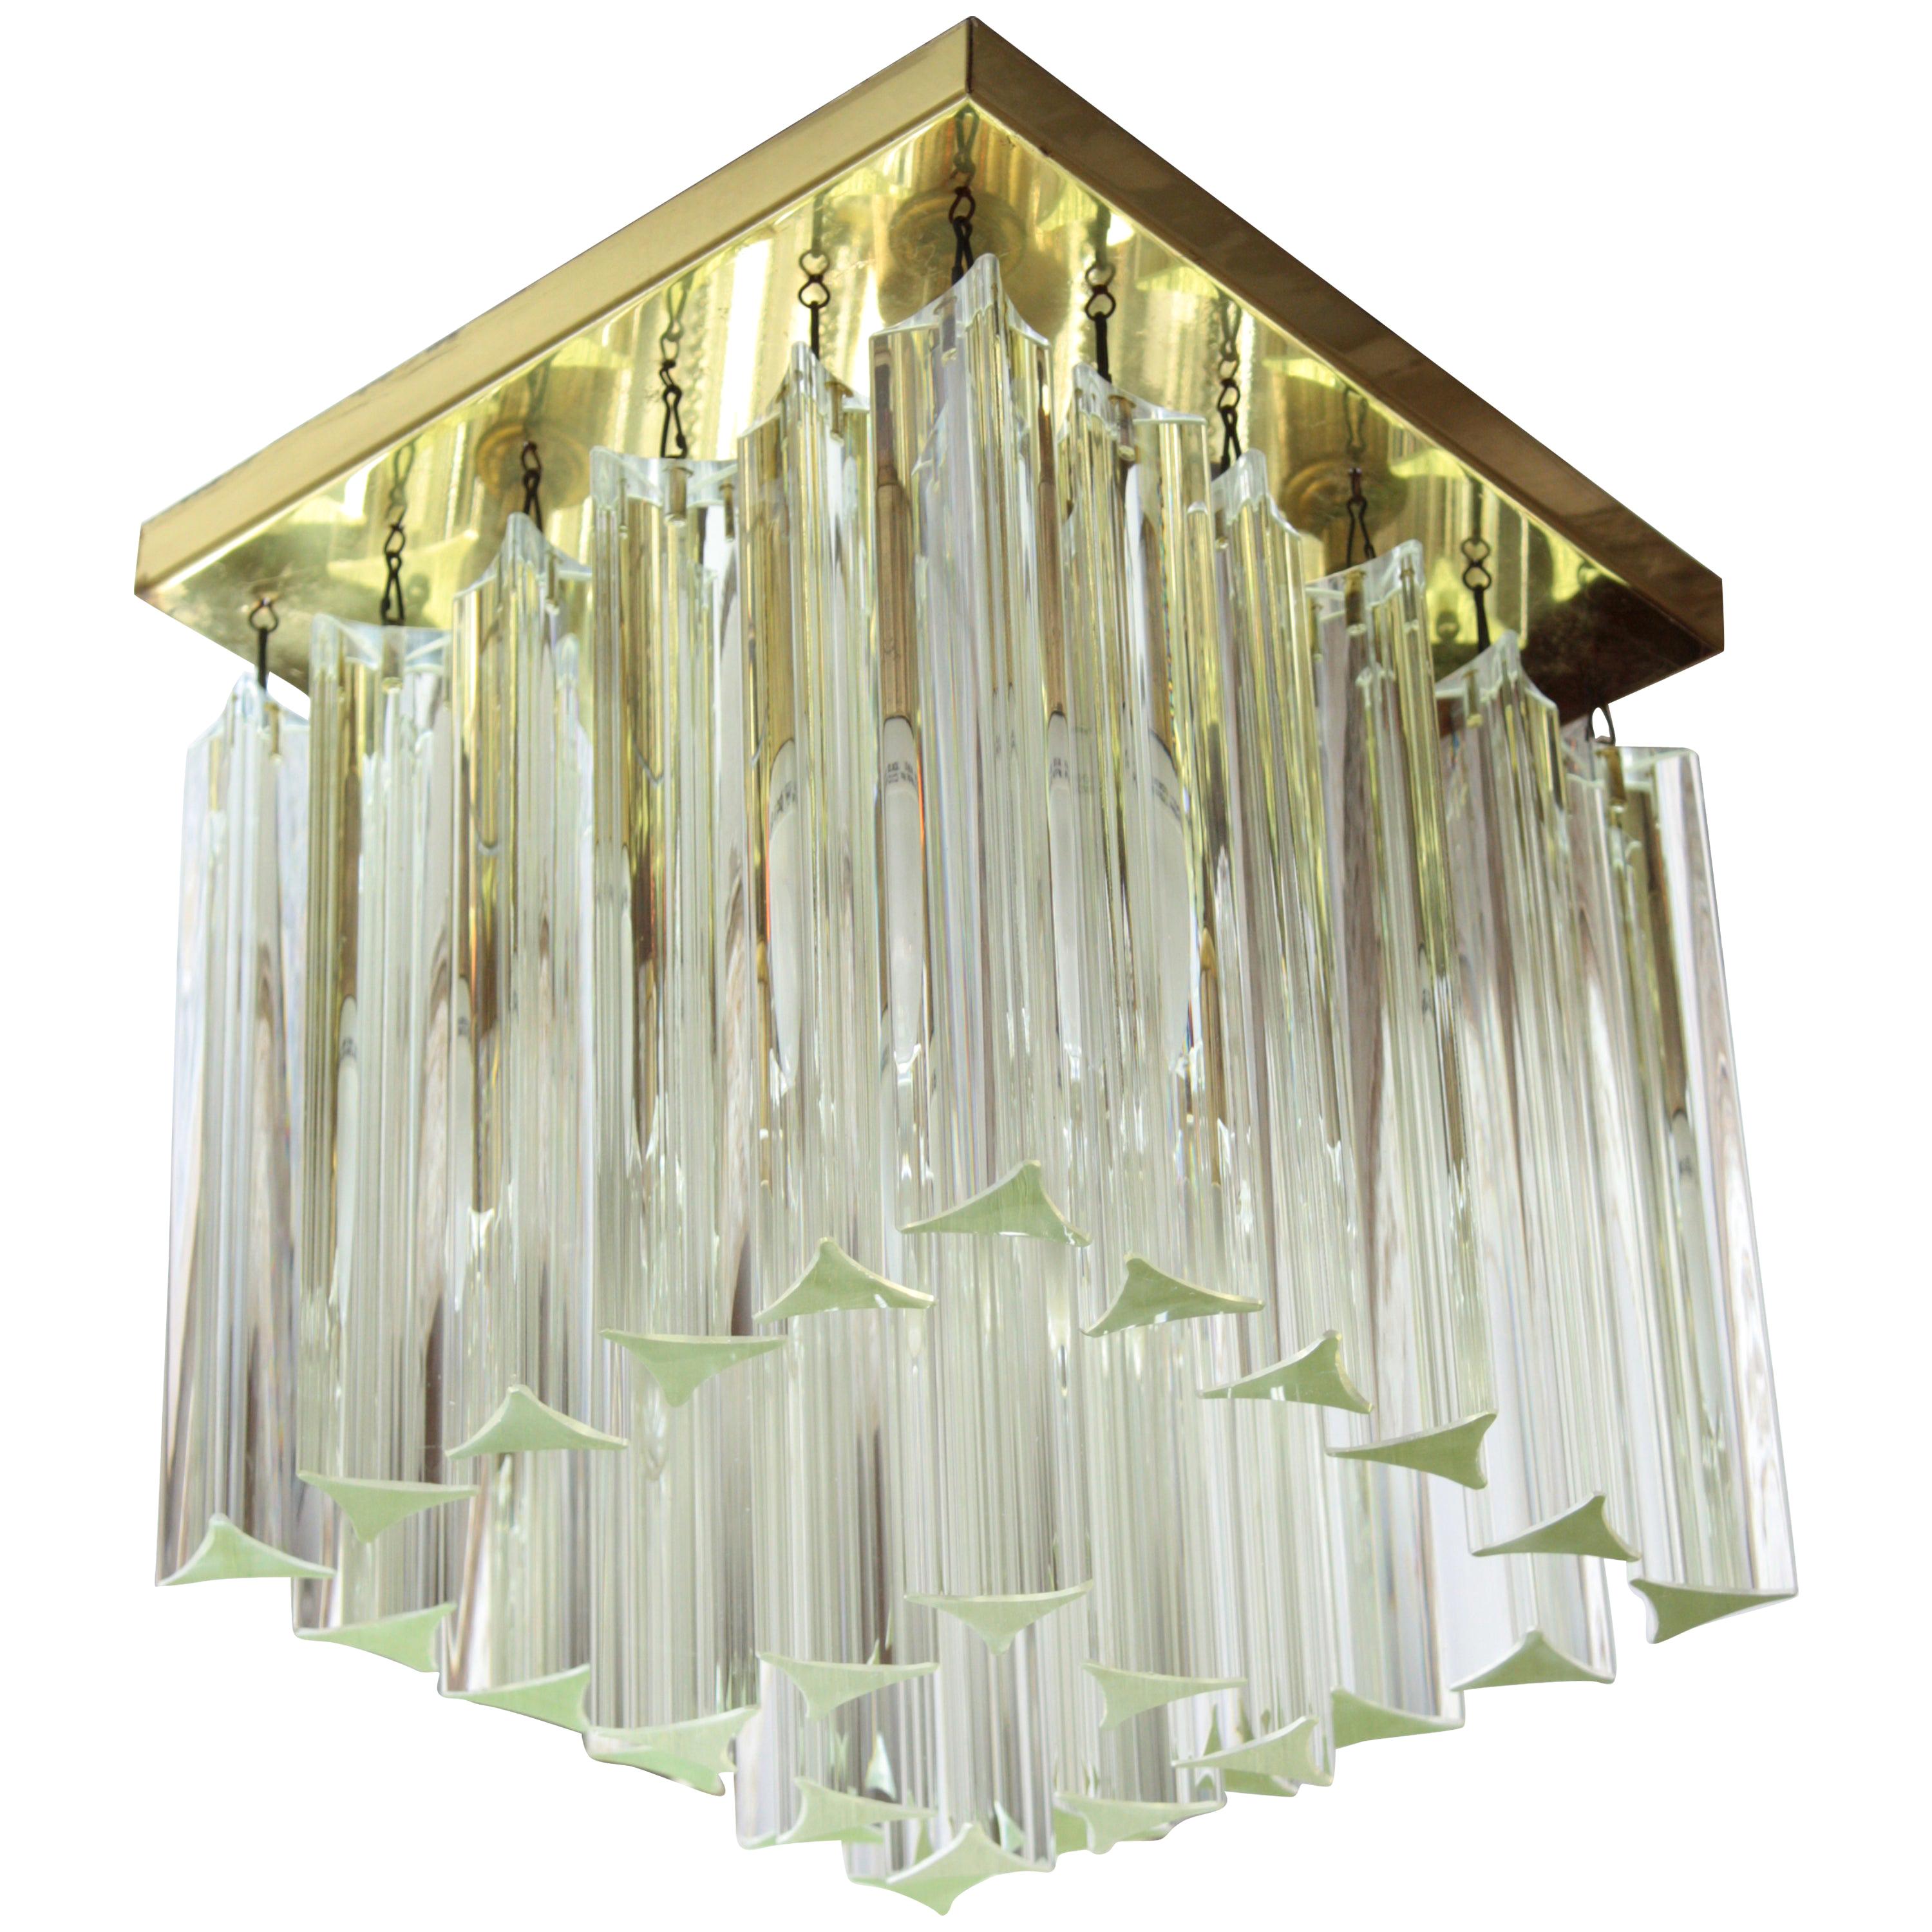 Italian Modernist Triedri Camer Murano Glass Ceiling Light Fixture, 1970s